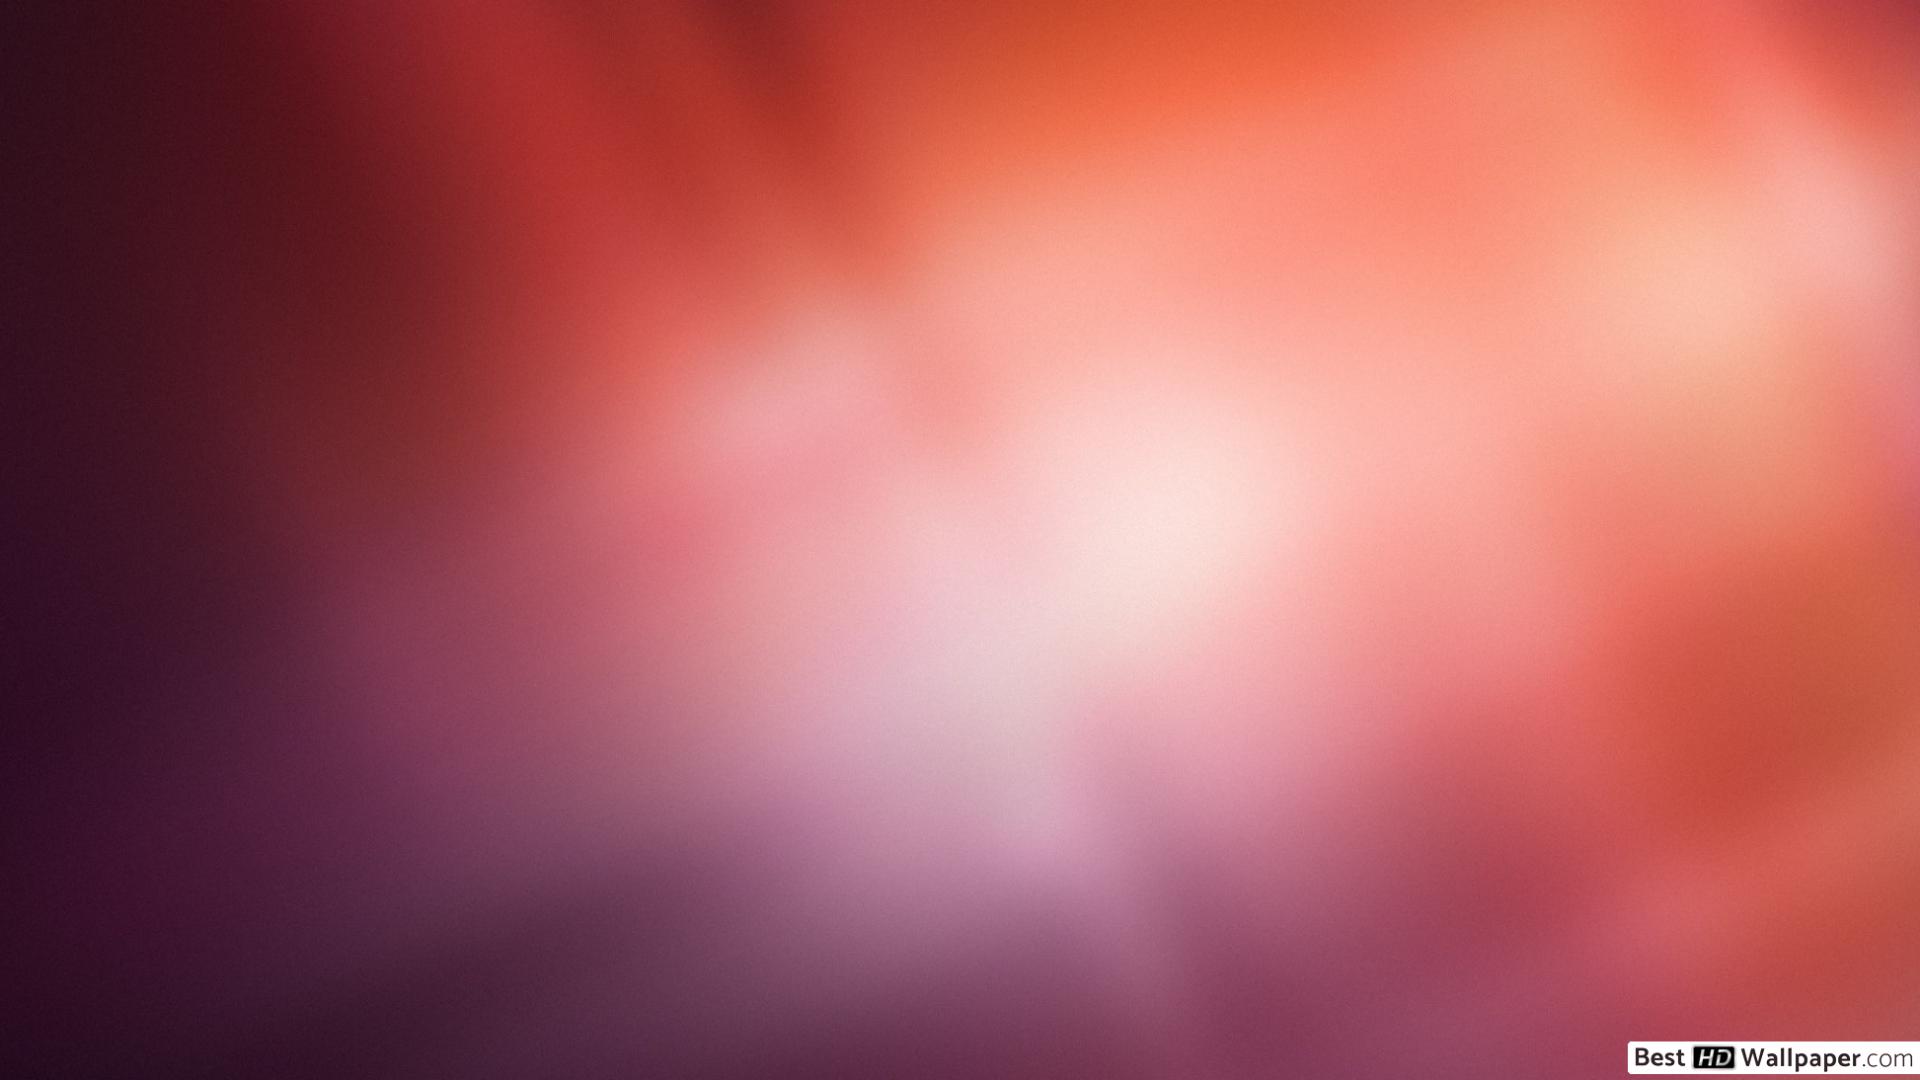 ubuntu wallpaper,red,pink,sky,light,purple